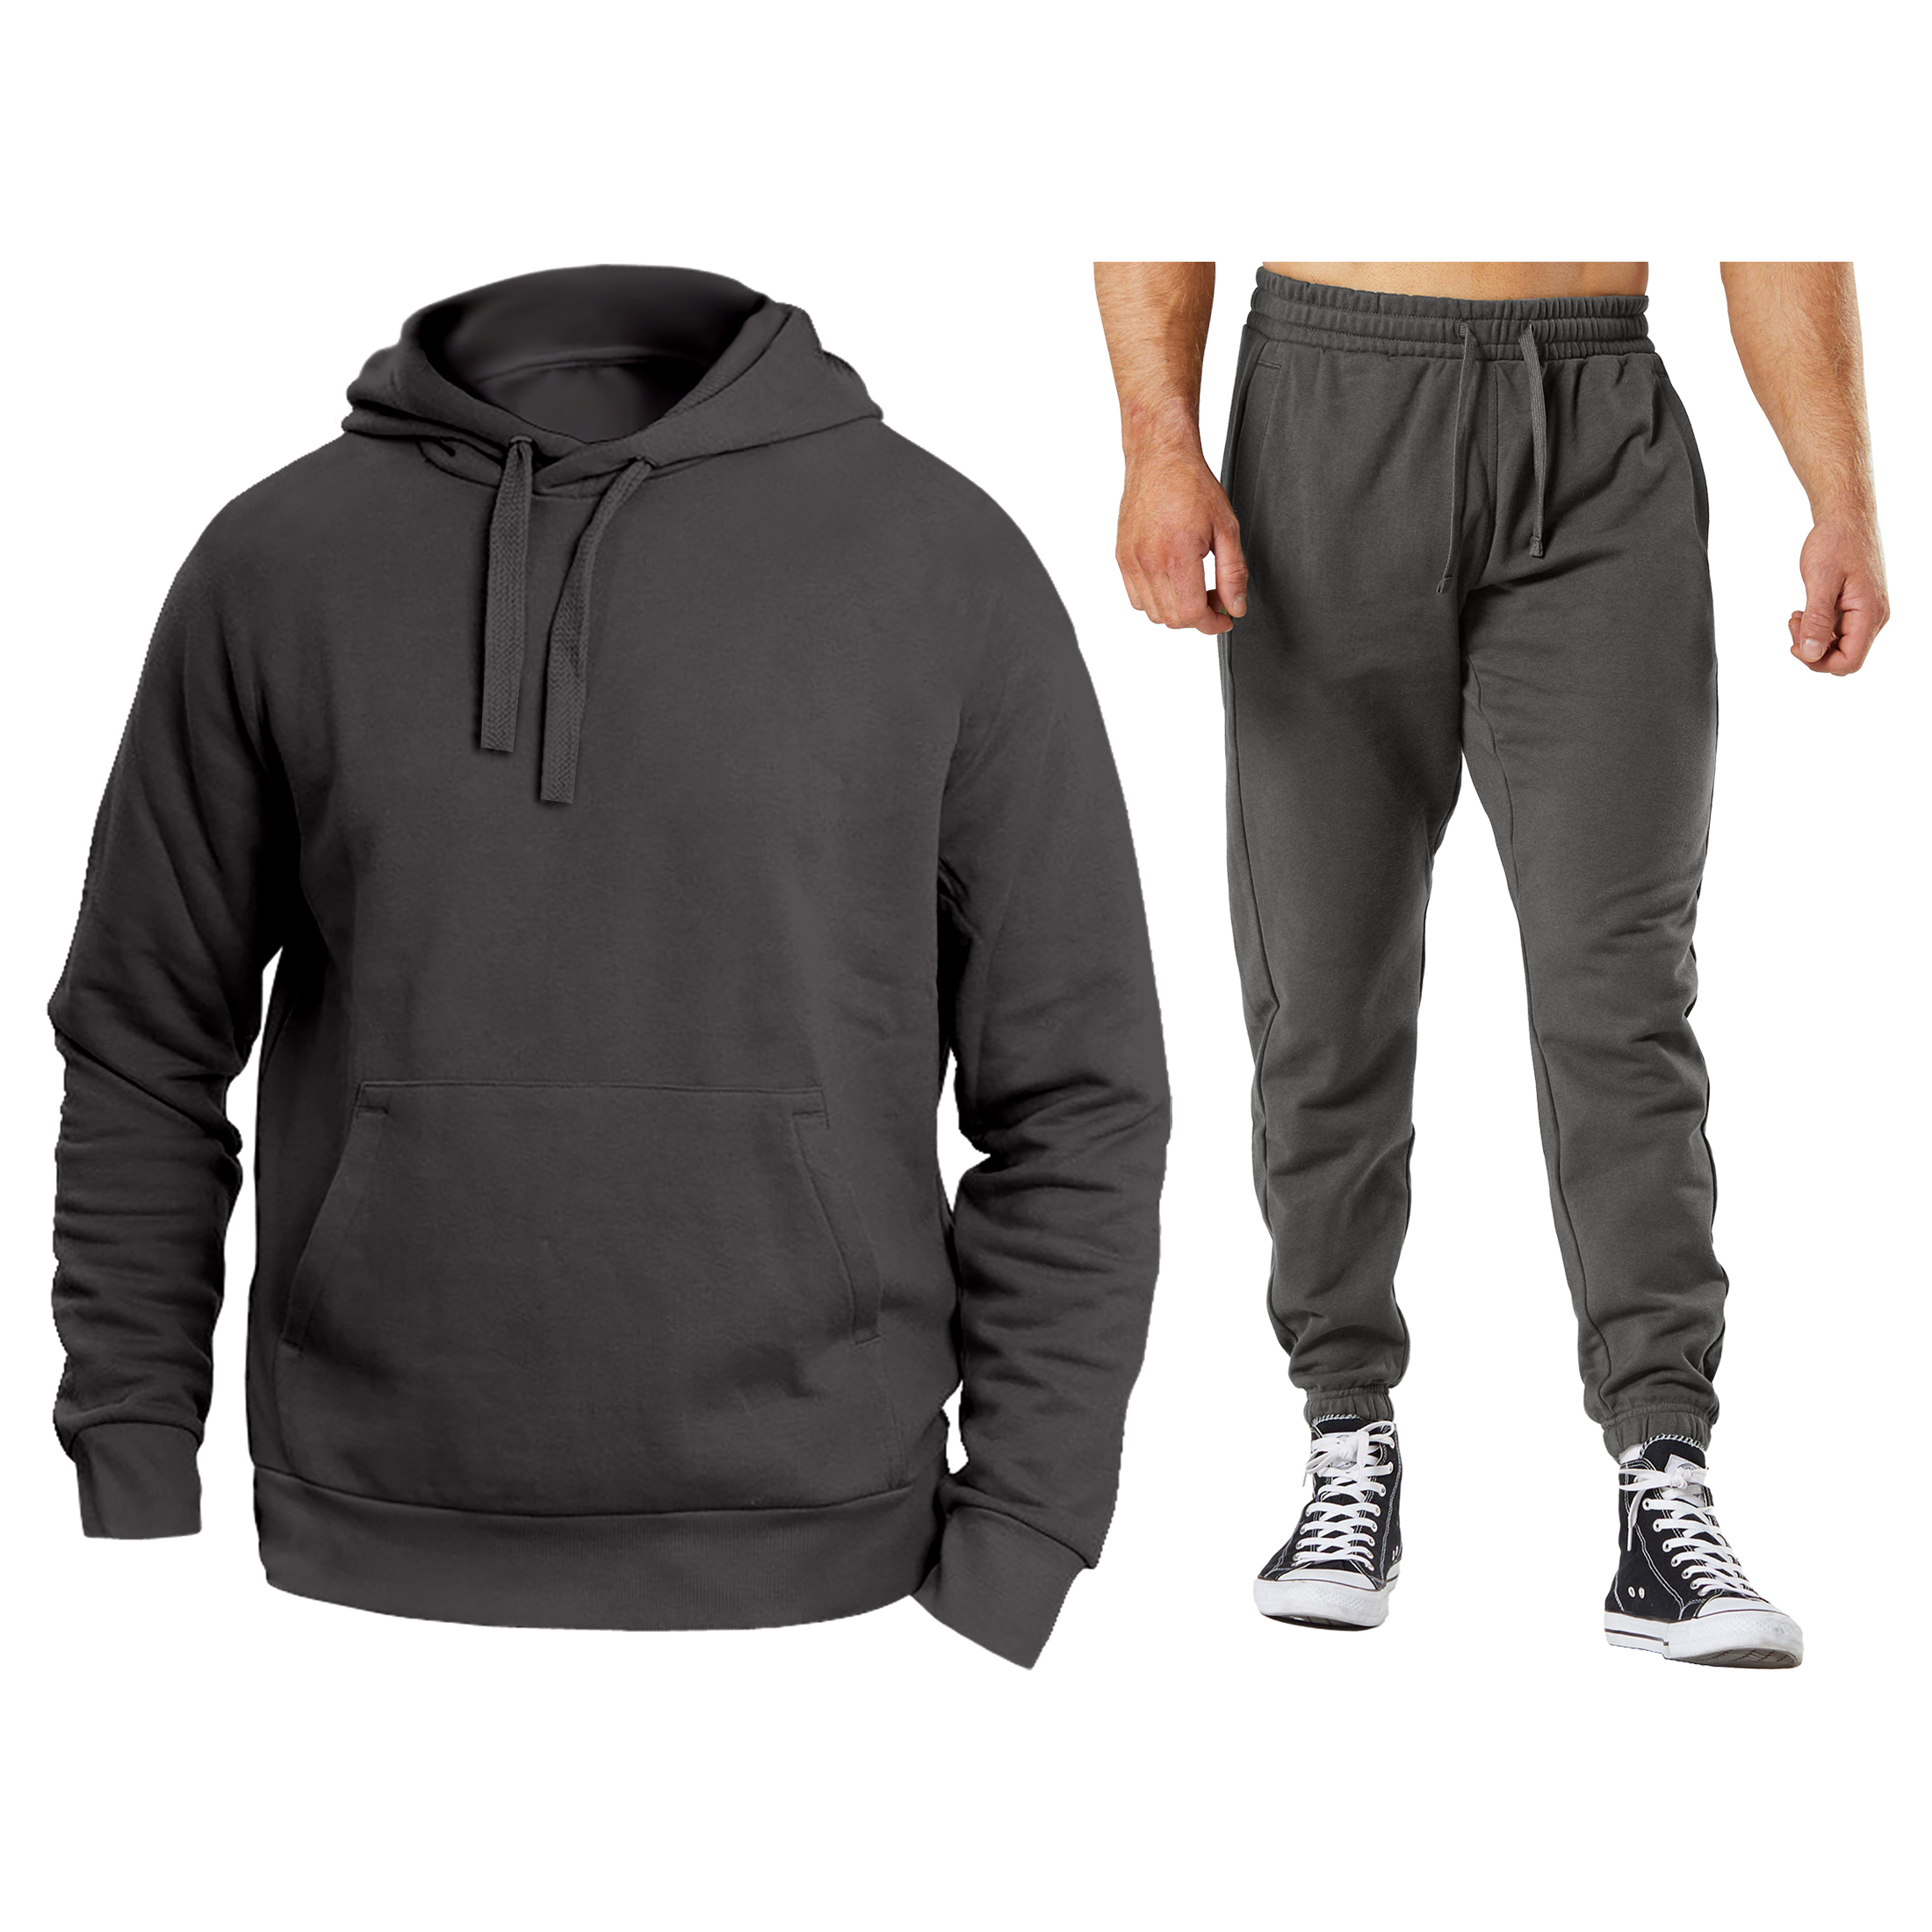 Men's Athletic Warm Jogging Pullover Active Sweatsuit - Charcoal, Medium